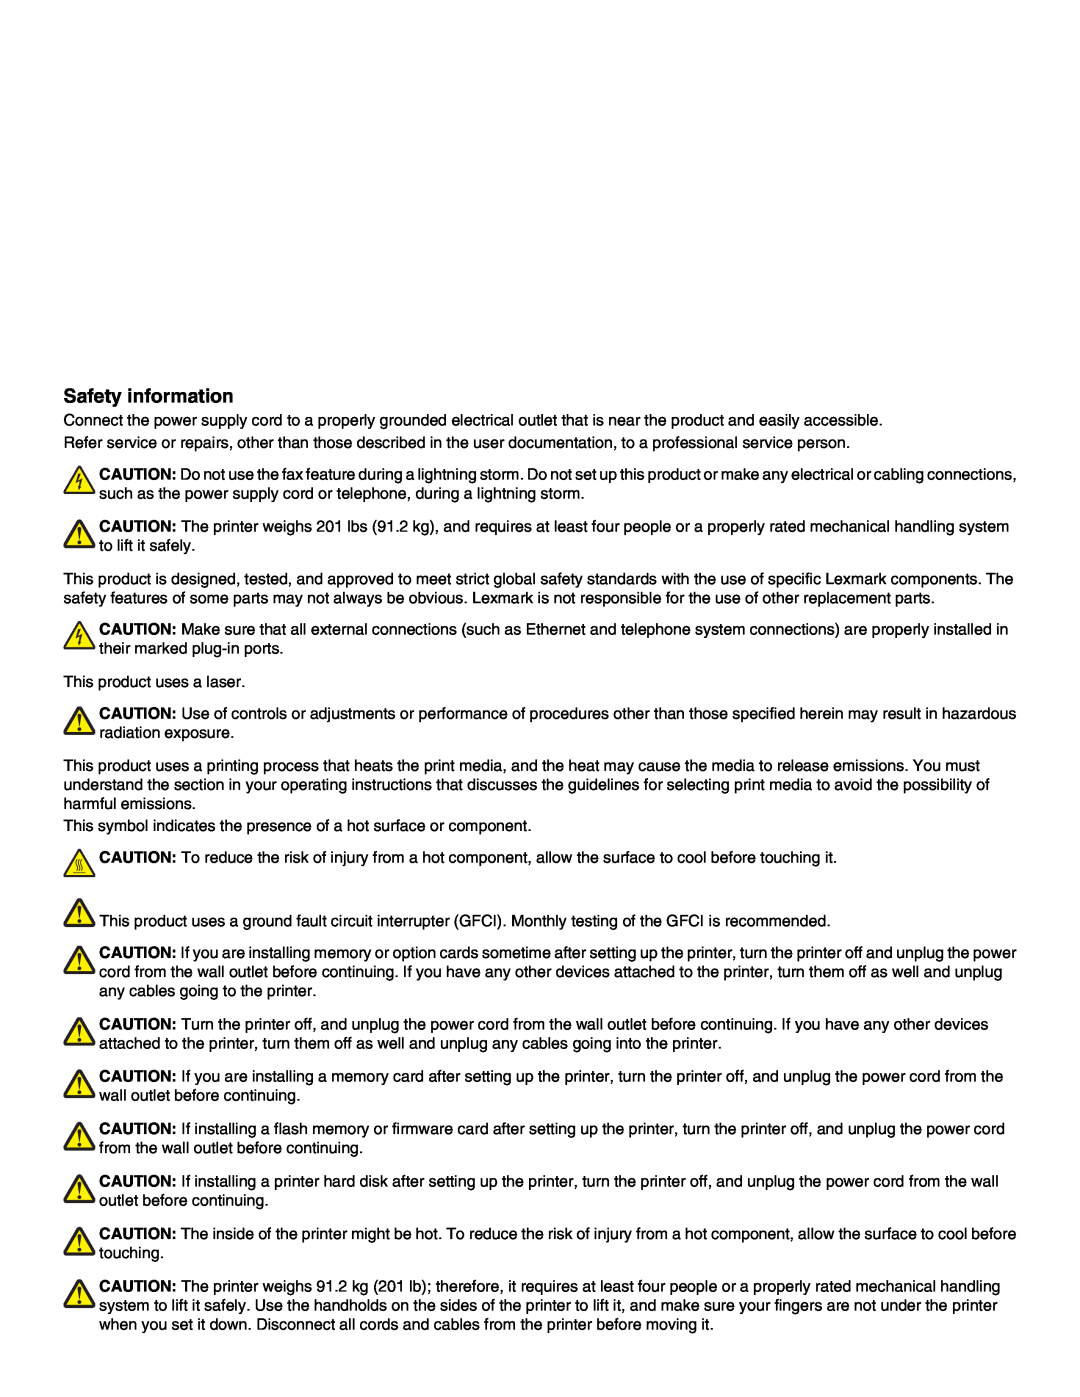 Lexmark C935 manual Safety information 